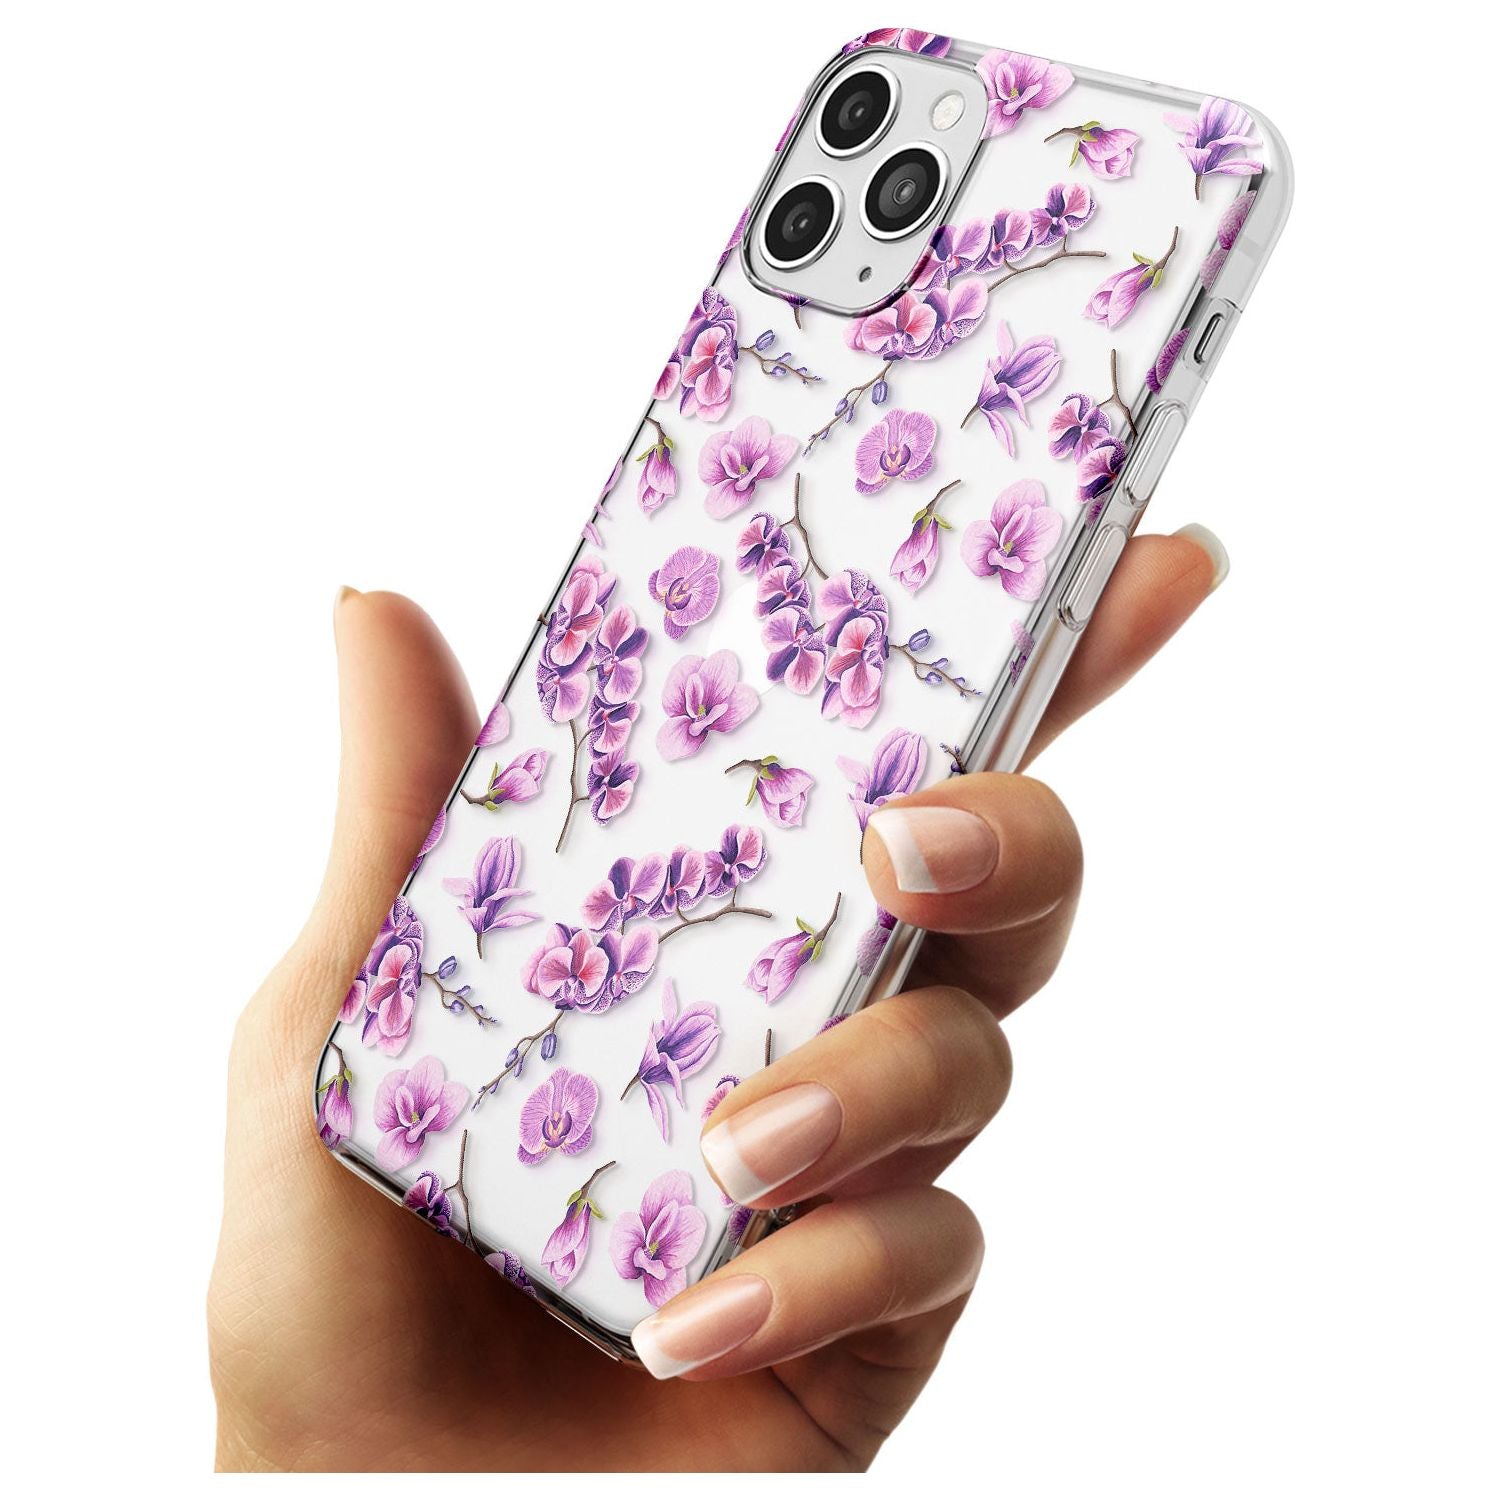 Purple Orchids Transparent Floral Slim TPU Phone Case for iPhone 11 Pro Max